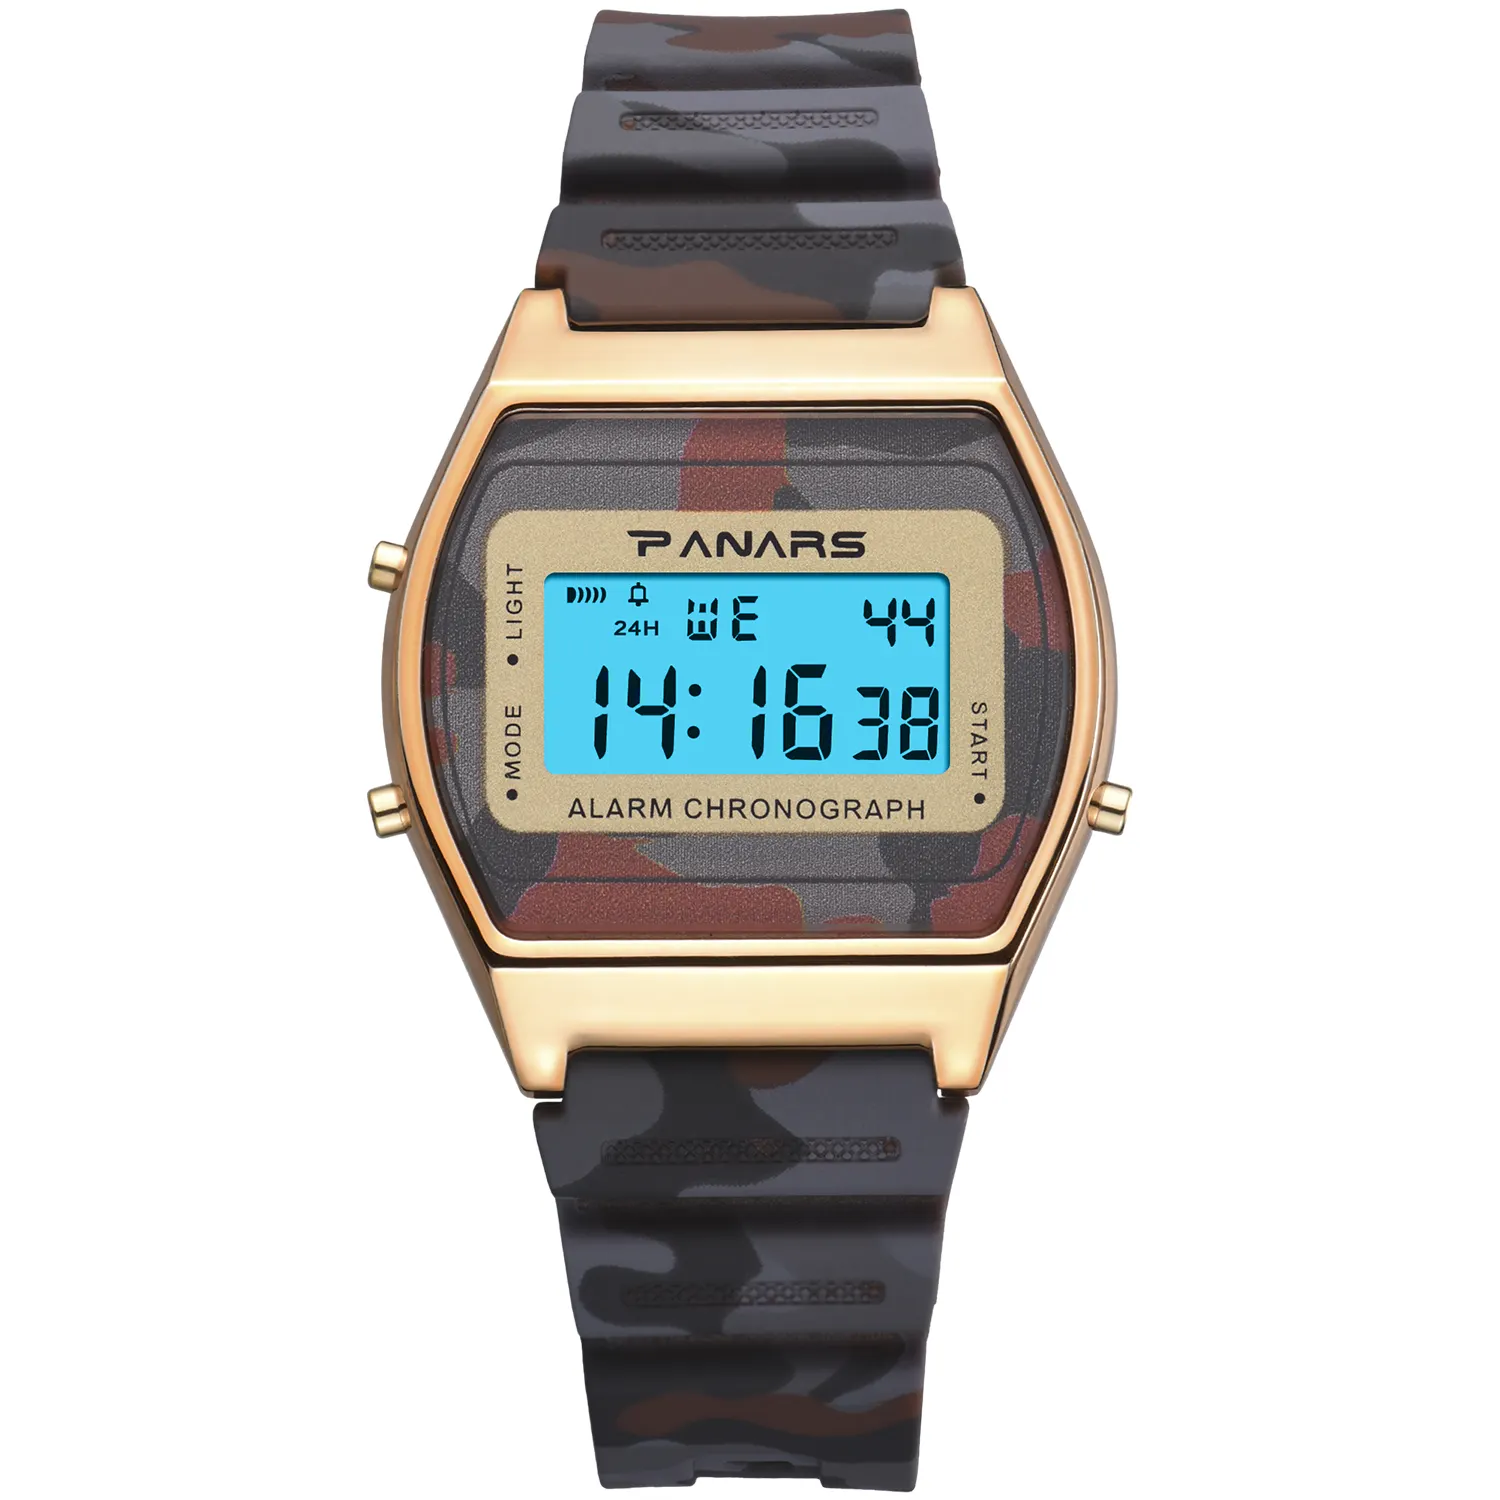 PANARS 8127 stylish camouflage mans digital watch cool Rubber band water proof calendar sports watch design